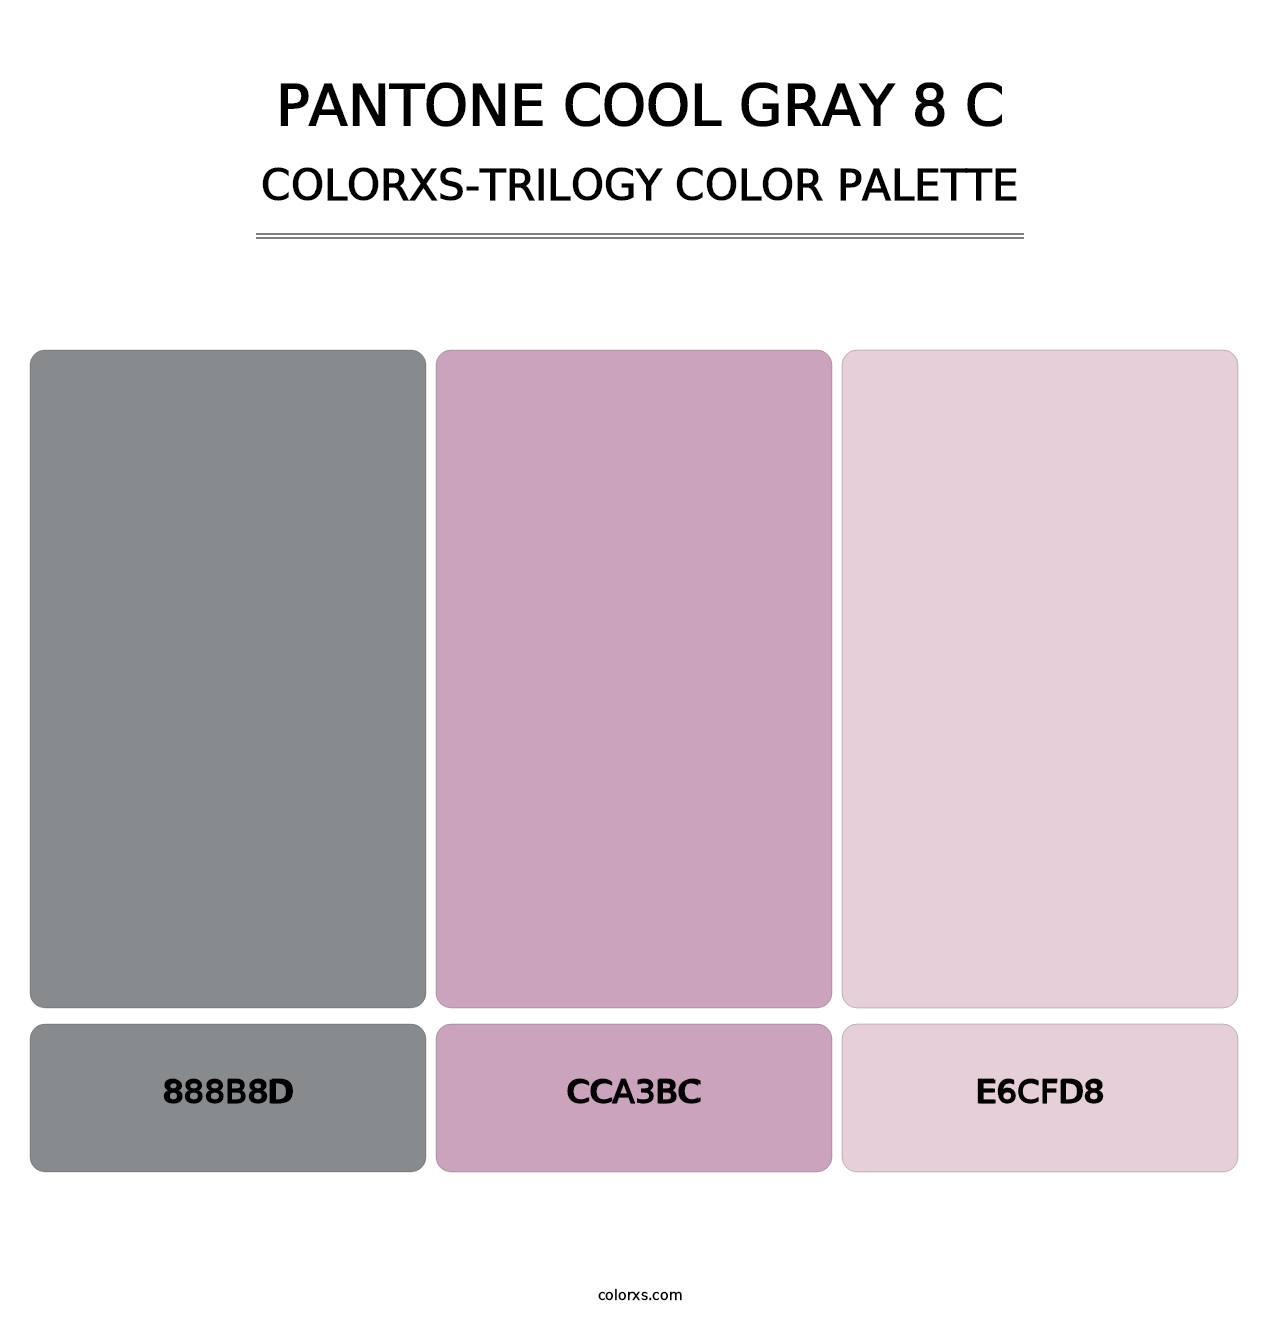 PANTONE Cool Gray 8 C - Colorxs Trilogy Palette